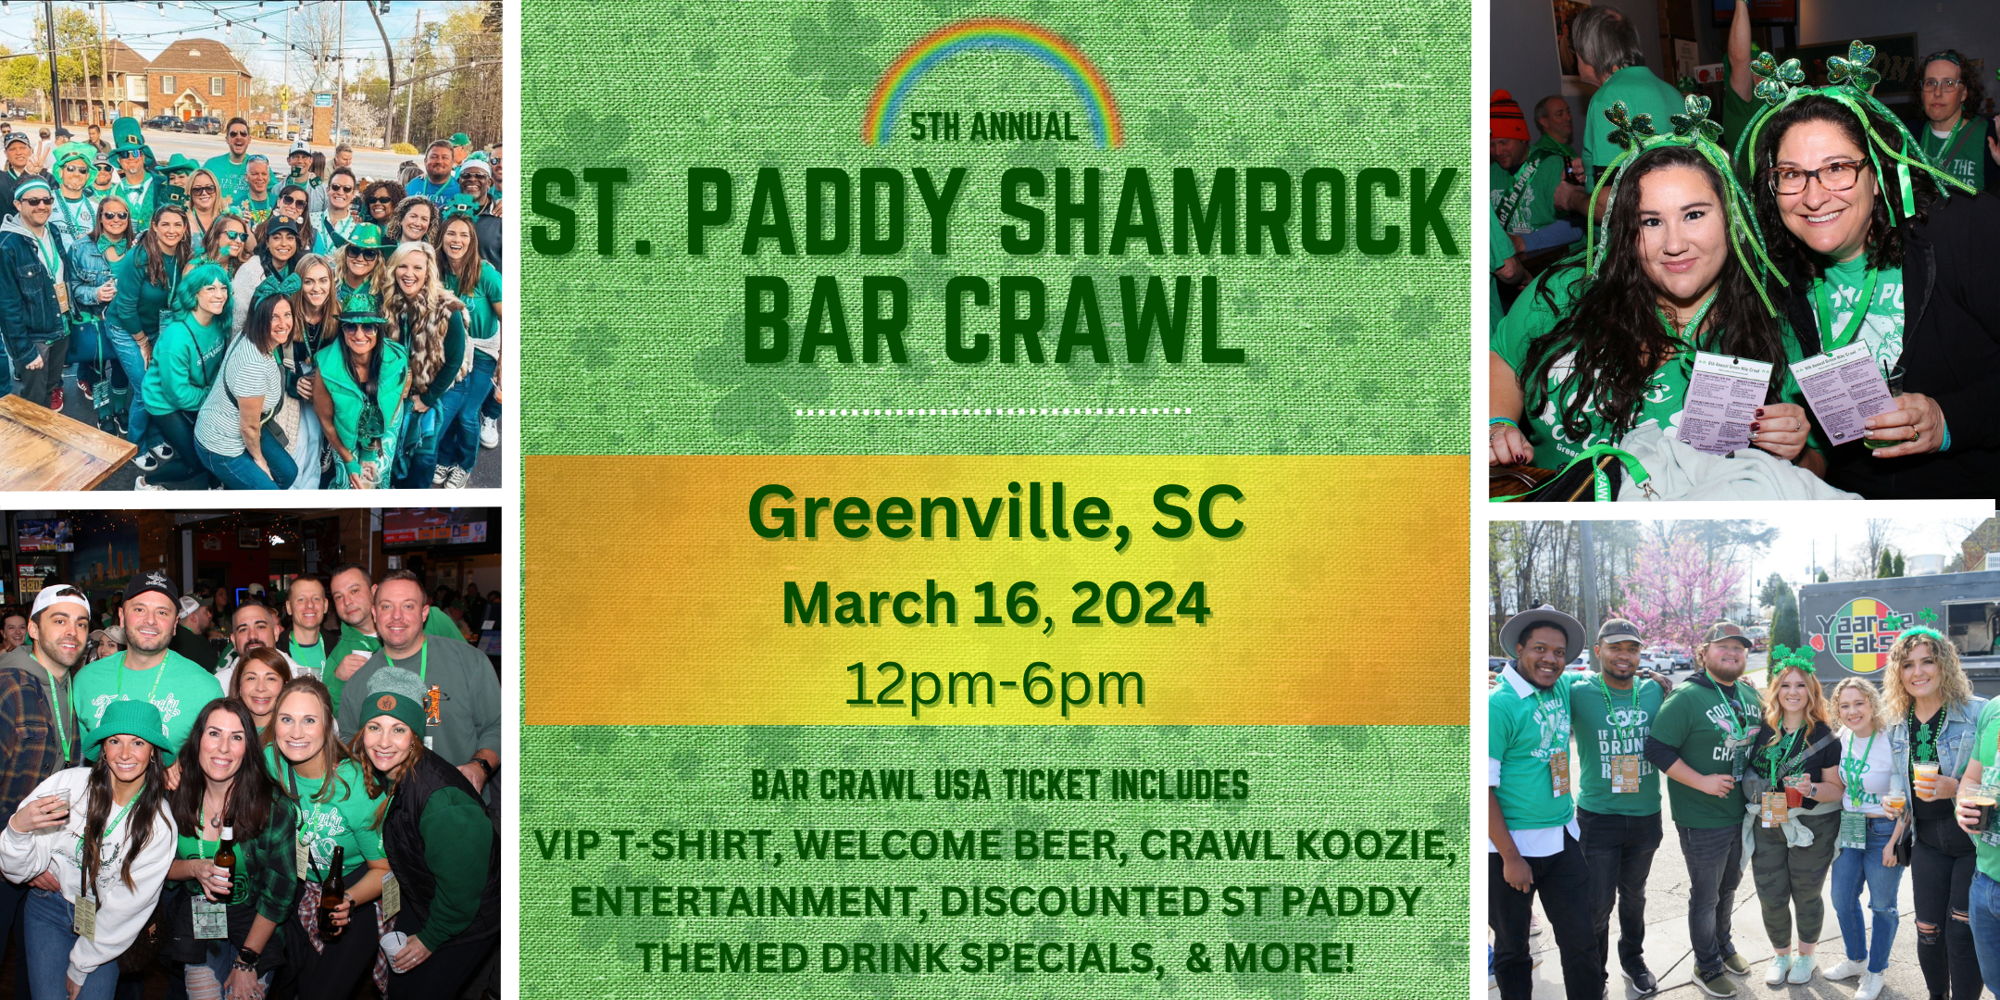 5th Annual St. Paddy Shamrock Bar Crawl: Greenville, SC promotional image